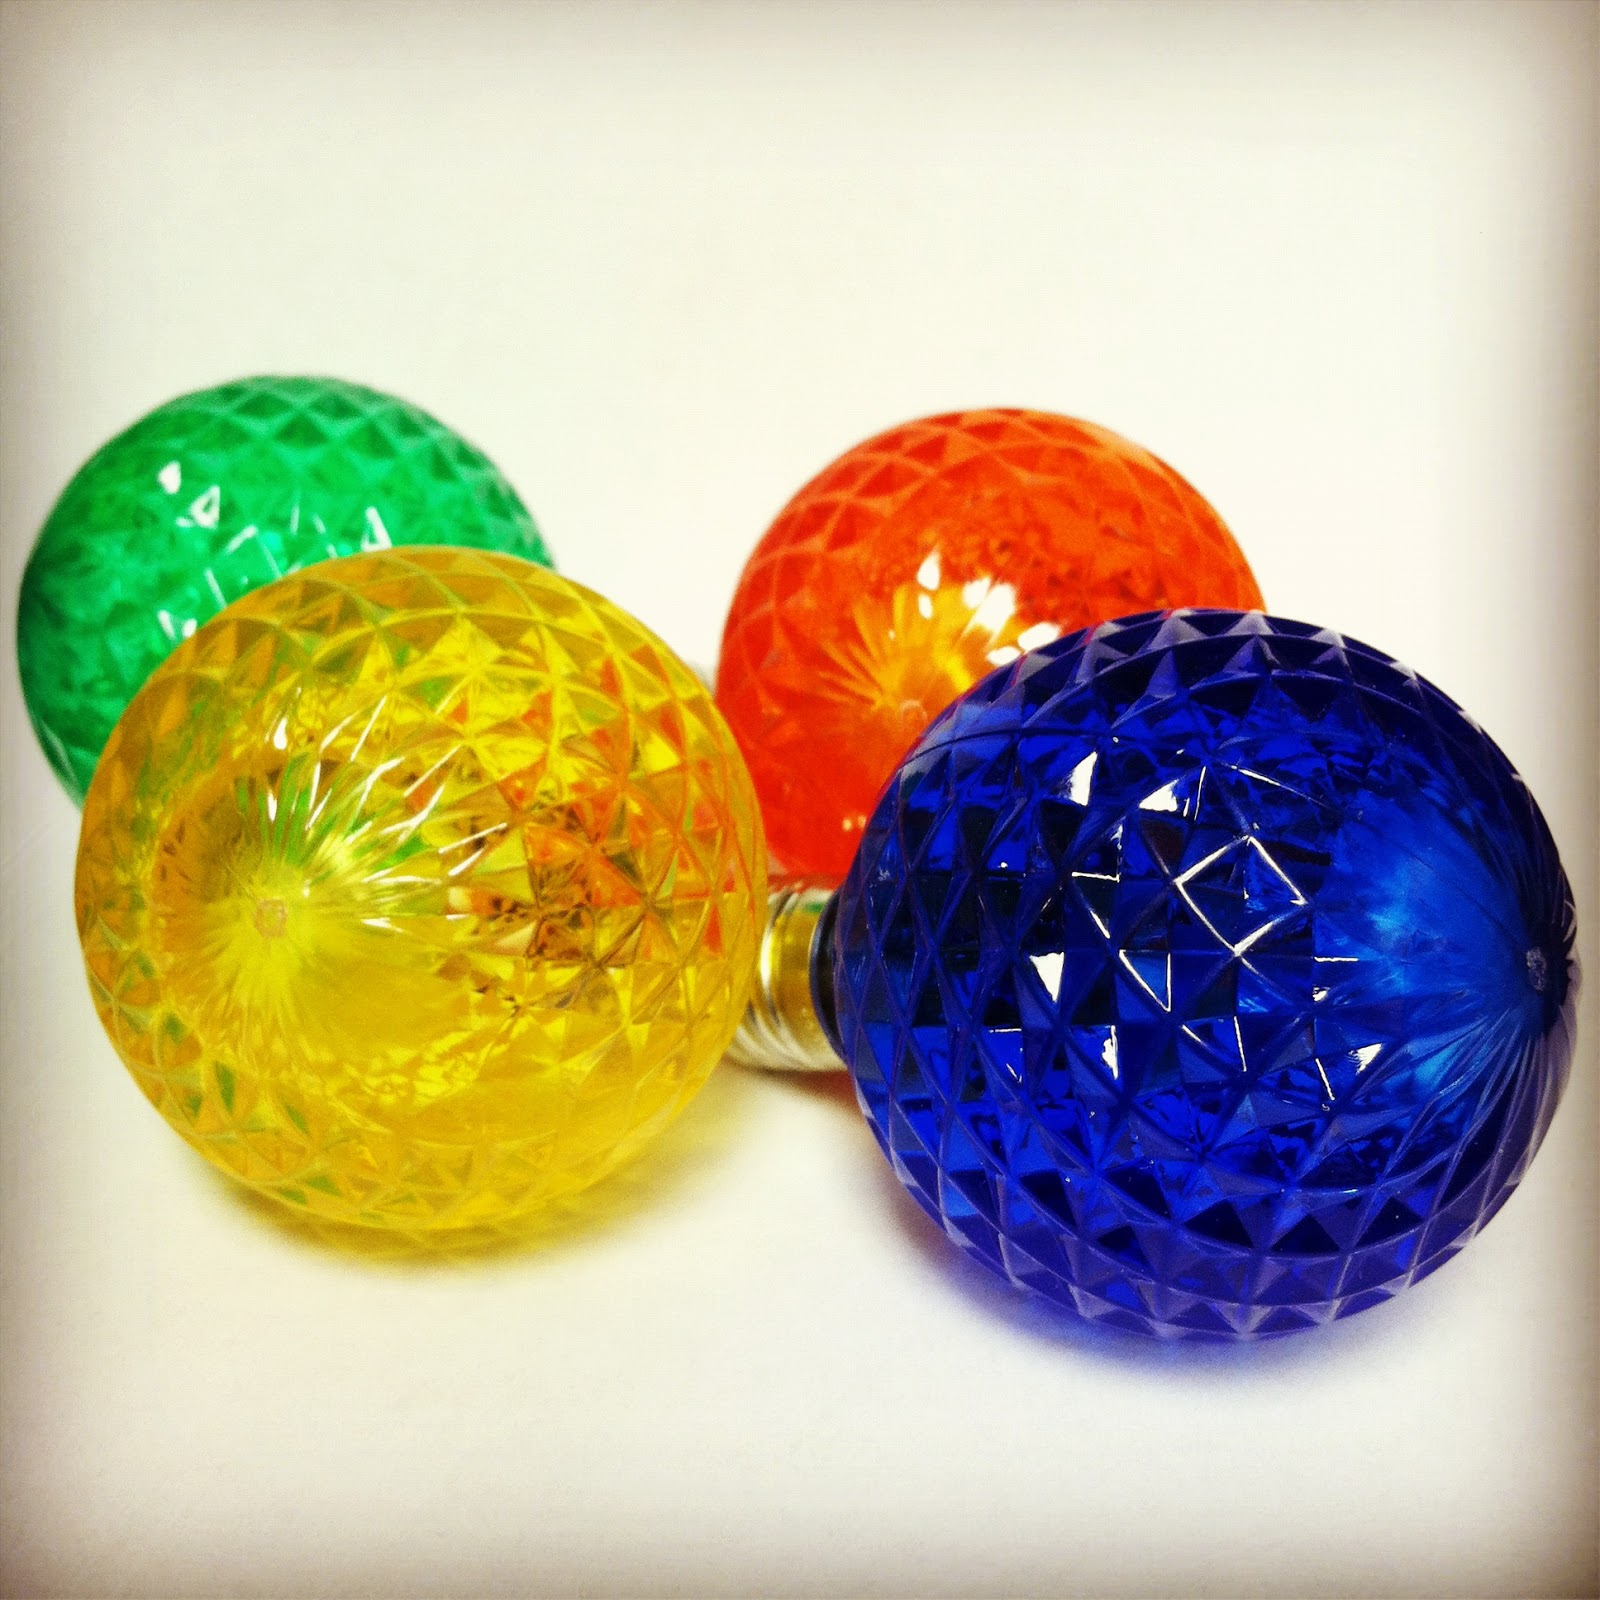 All American Christmas Co. Blog: Globe bulbs